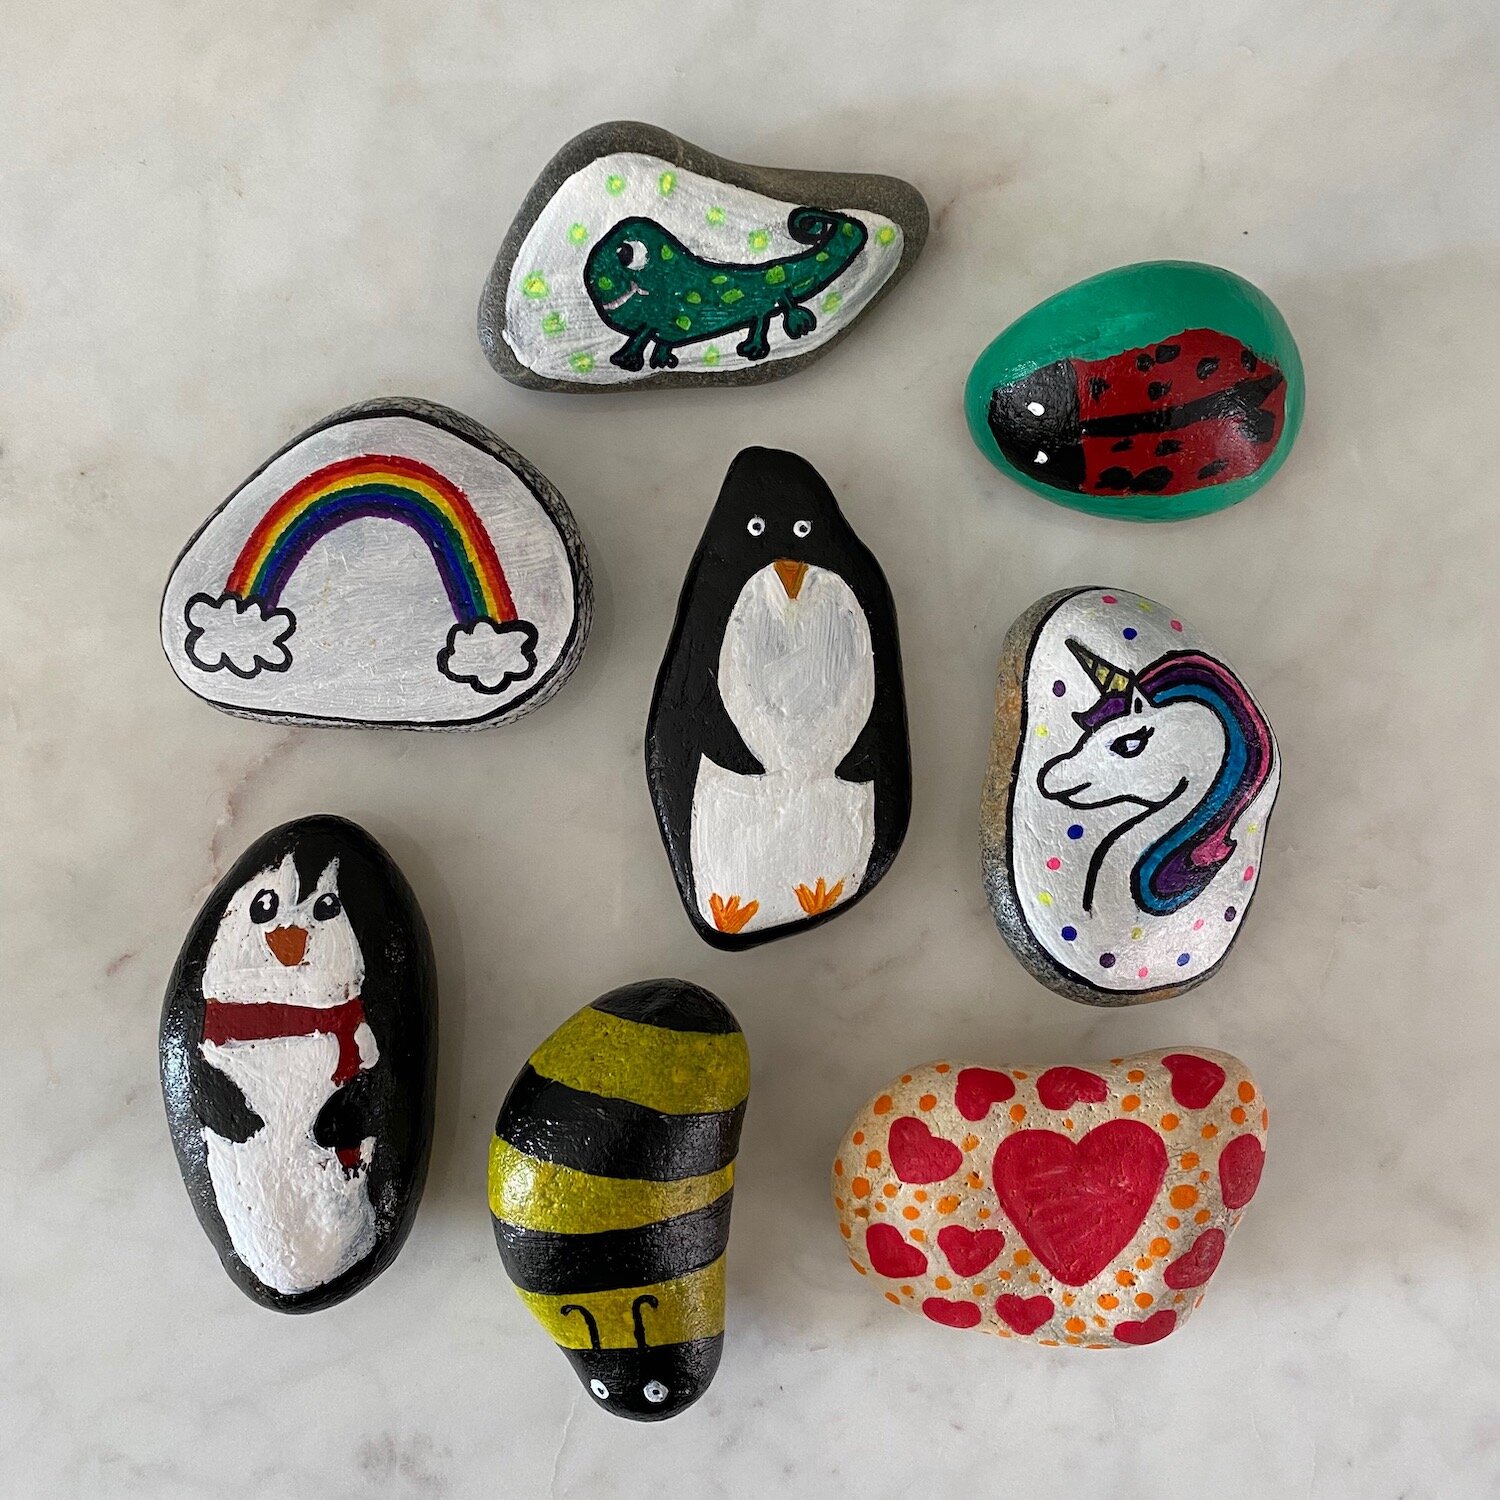 Creativity for Kids Hide & Seek Holiday Rock Painting Kit